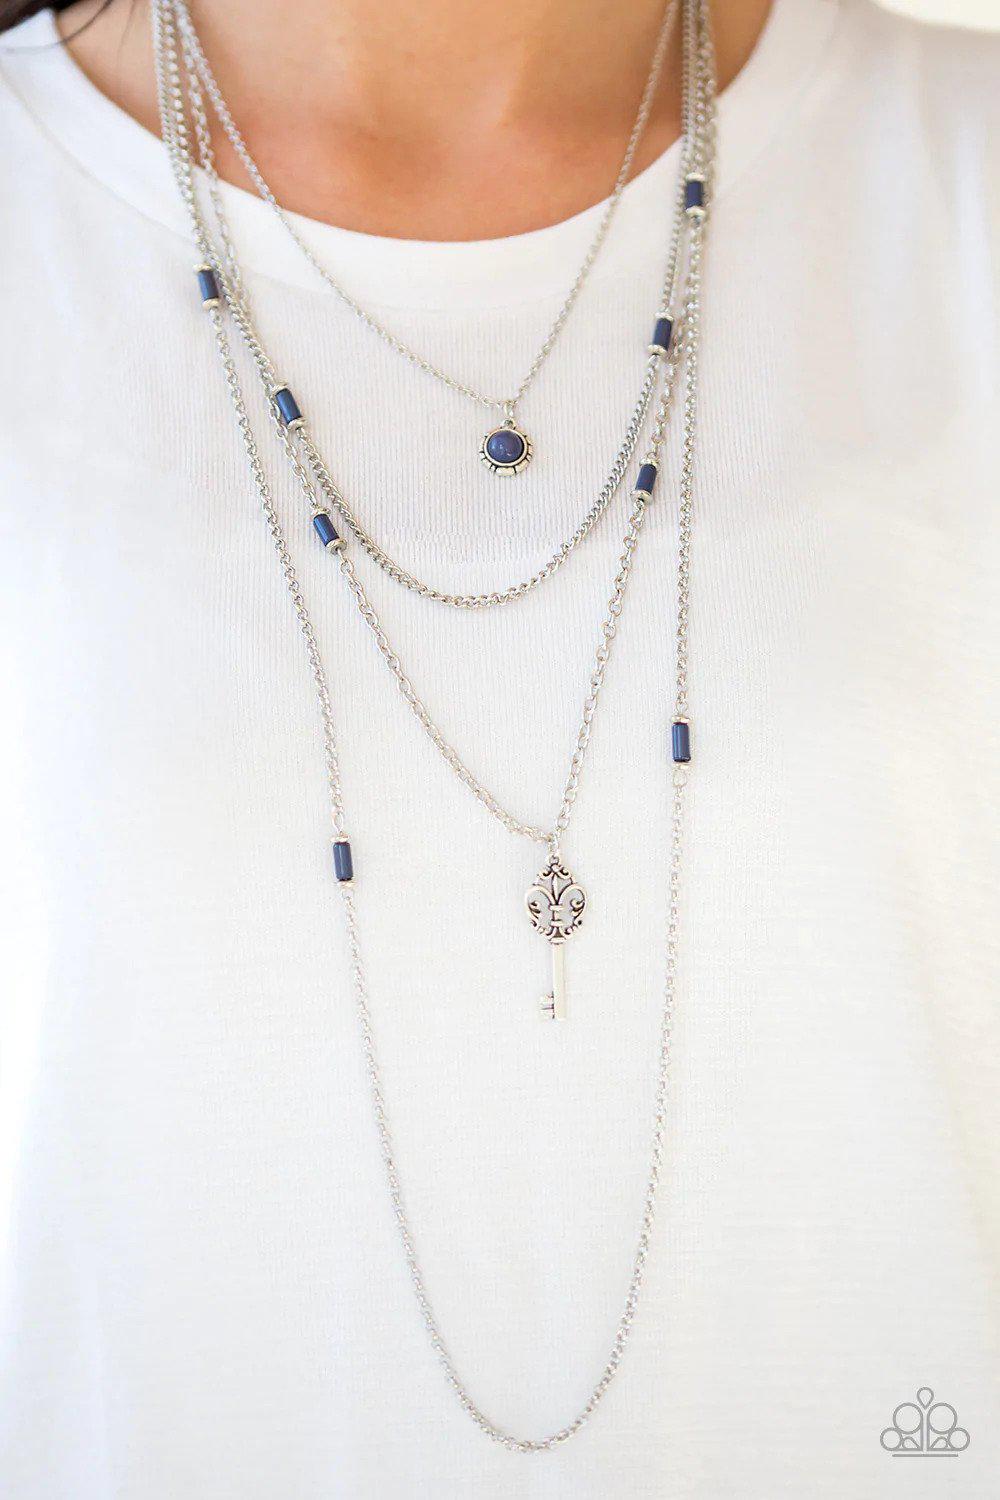 Key Keynote Blue Necklace - Paparazzi Accessories- lightbox - CarasShop.com - $5 Jewelry by Cara Jewels